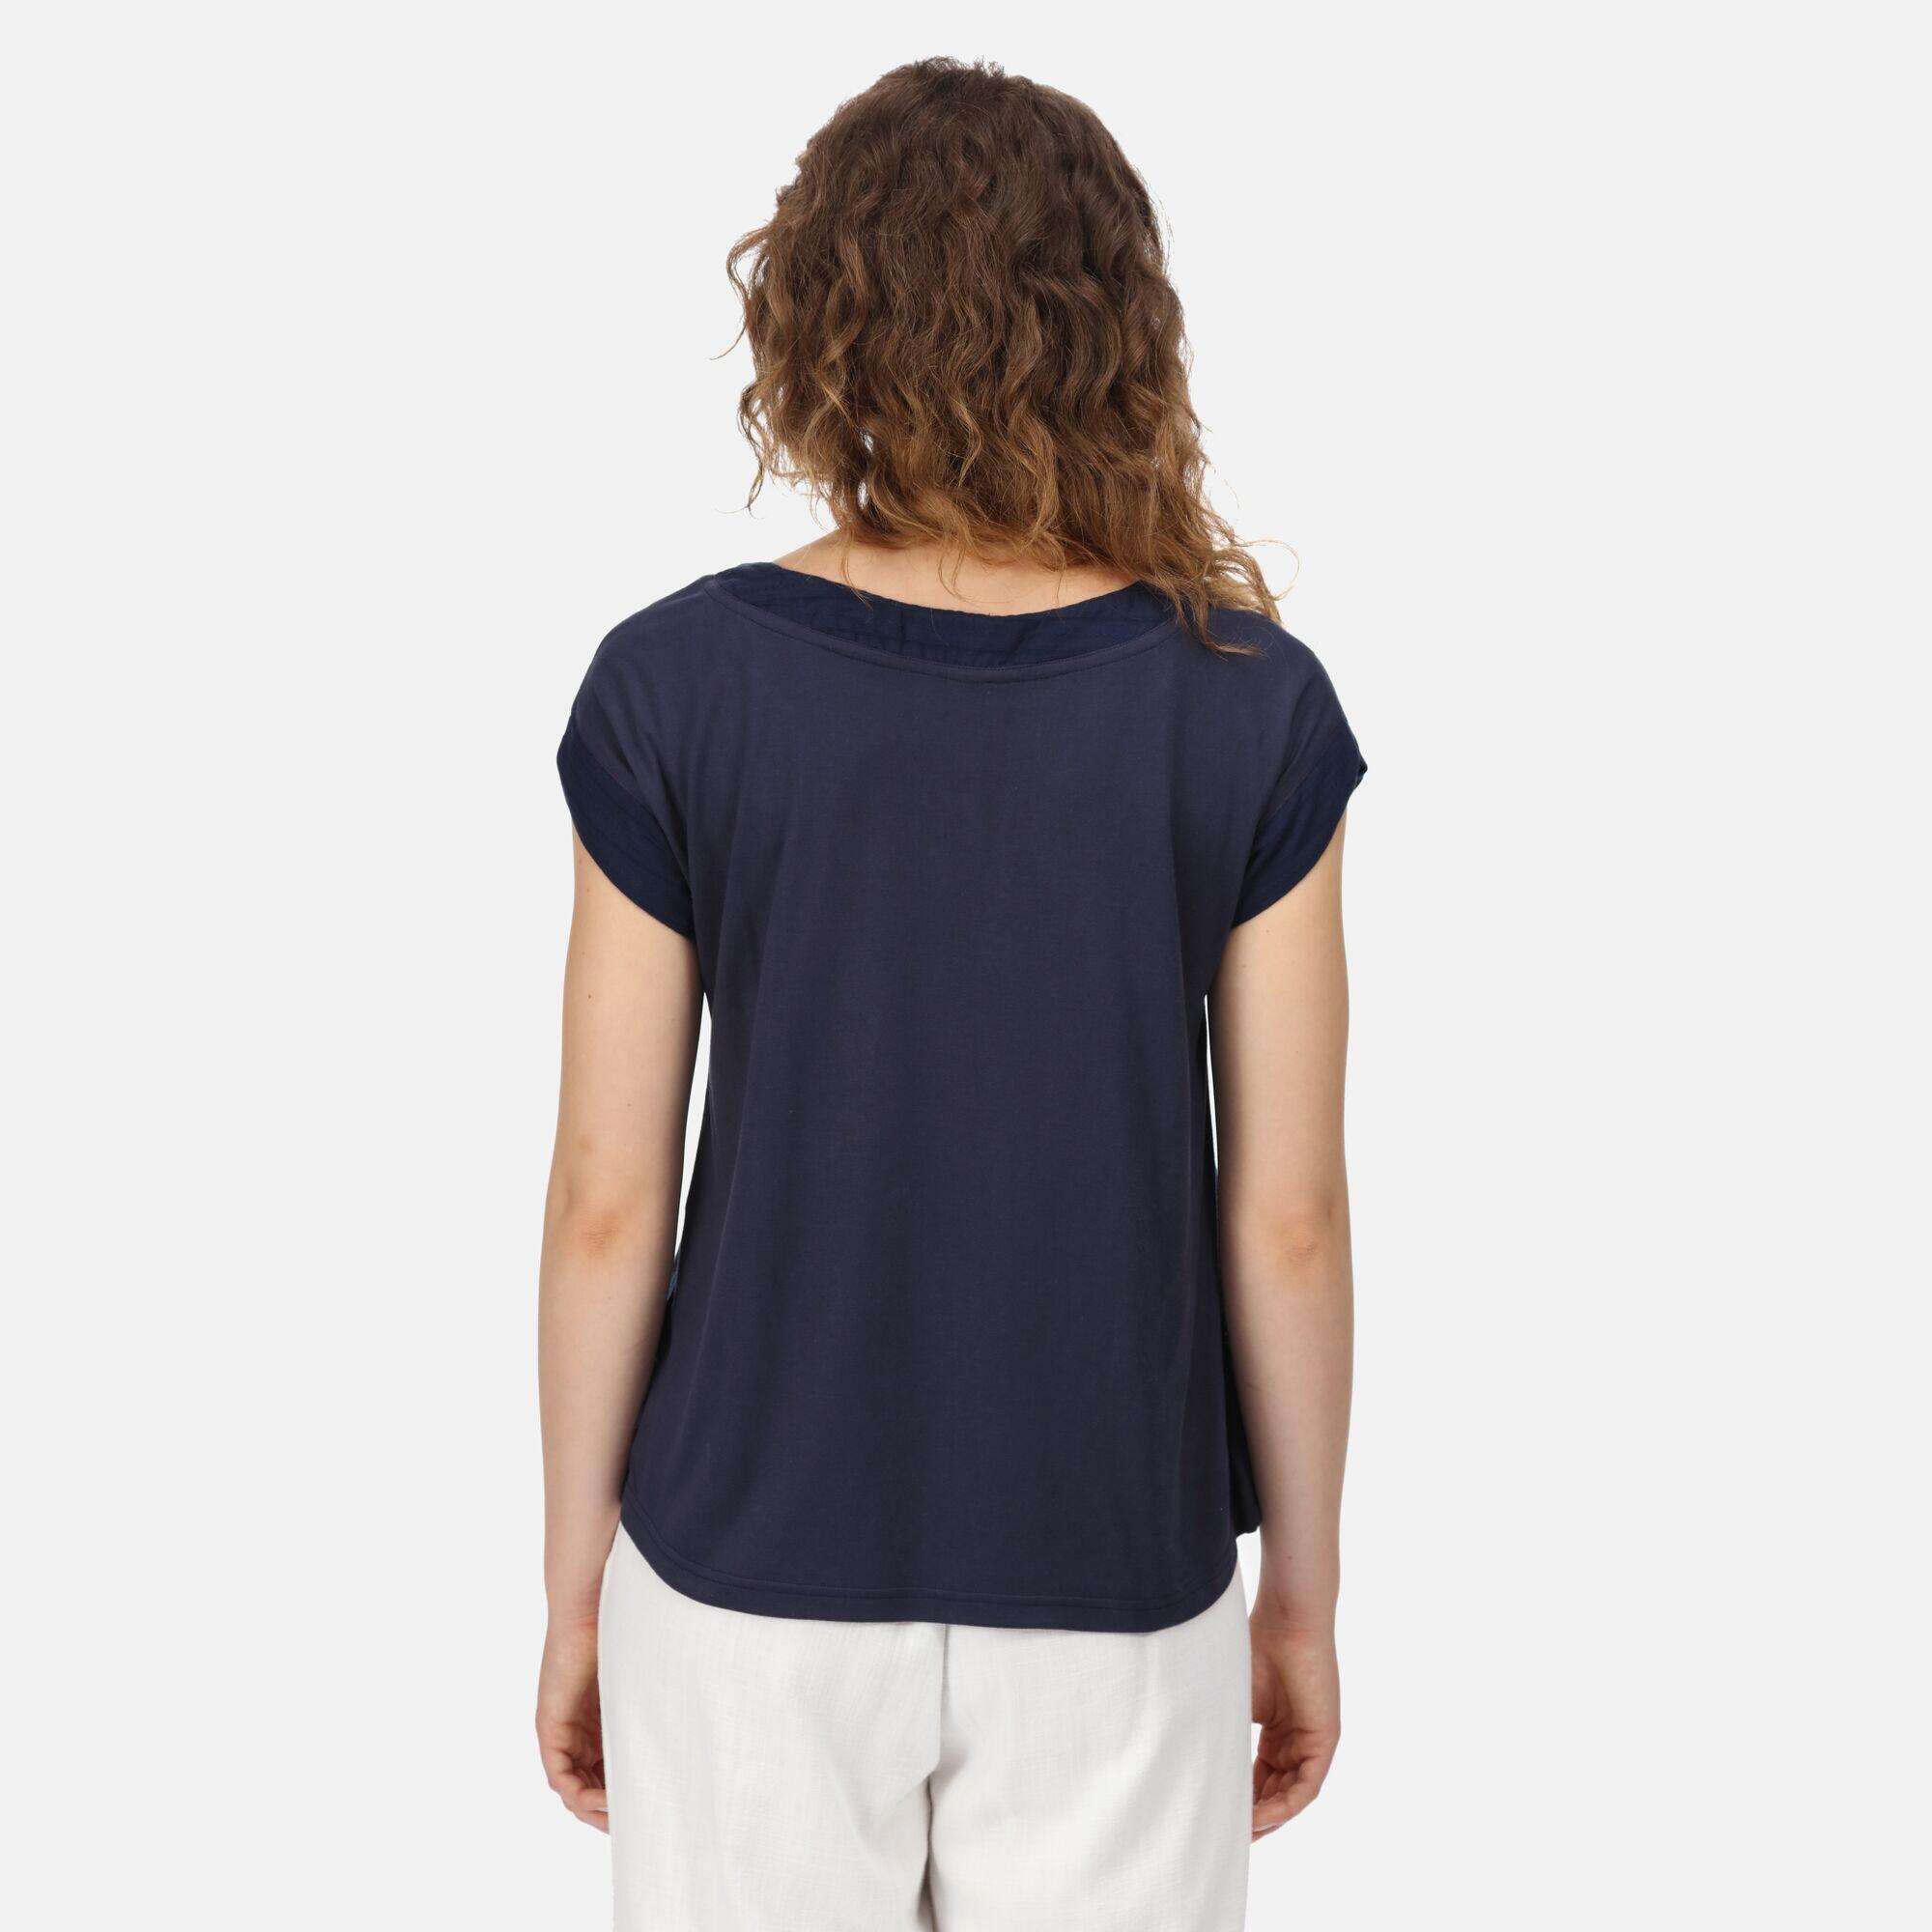 Adine Women's Walking Short Sleeve T-Shirt - Navy 2/5